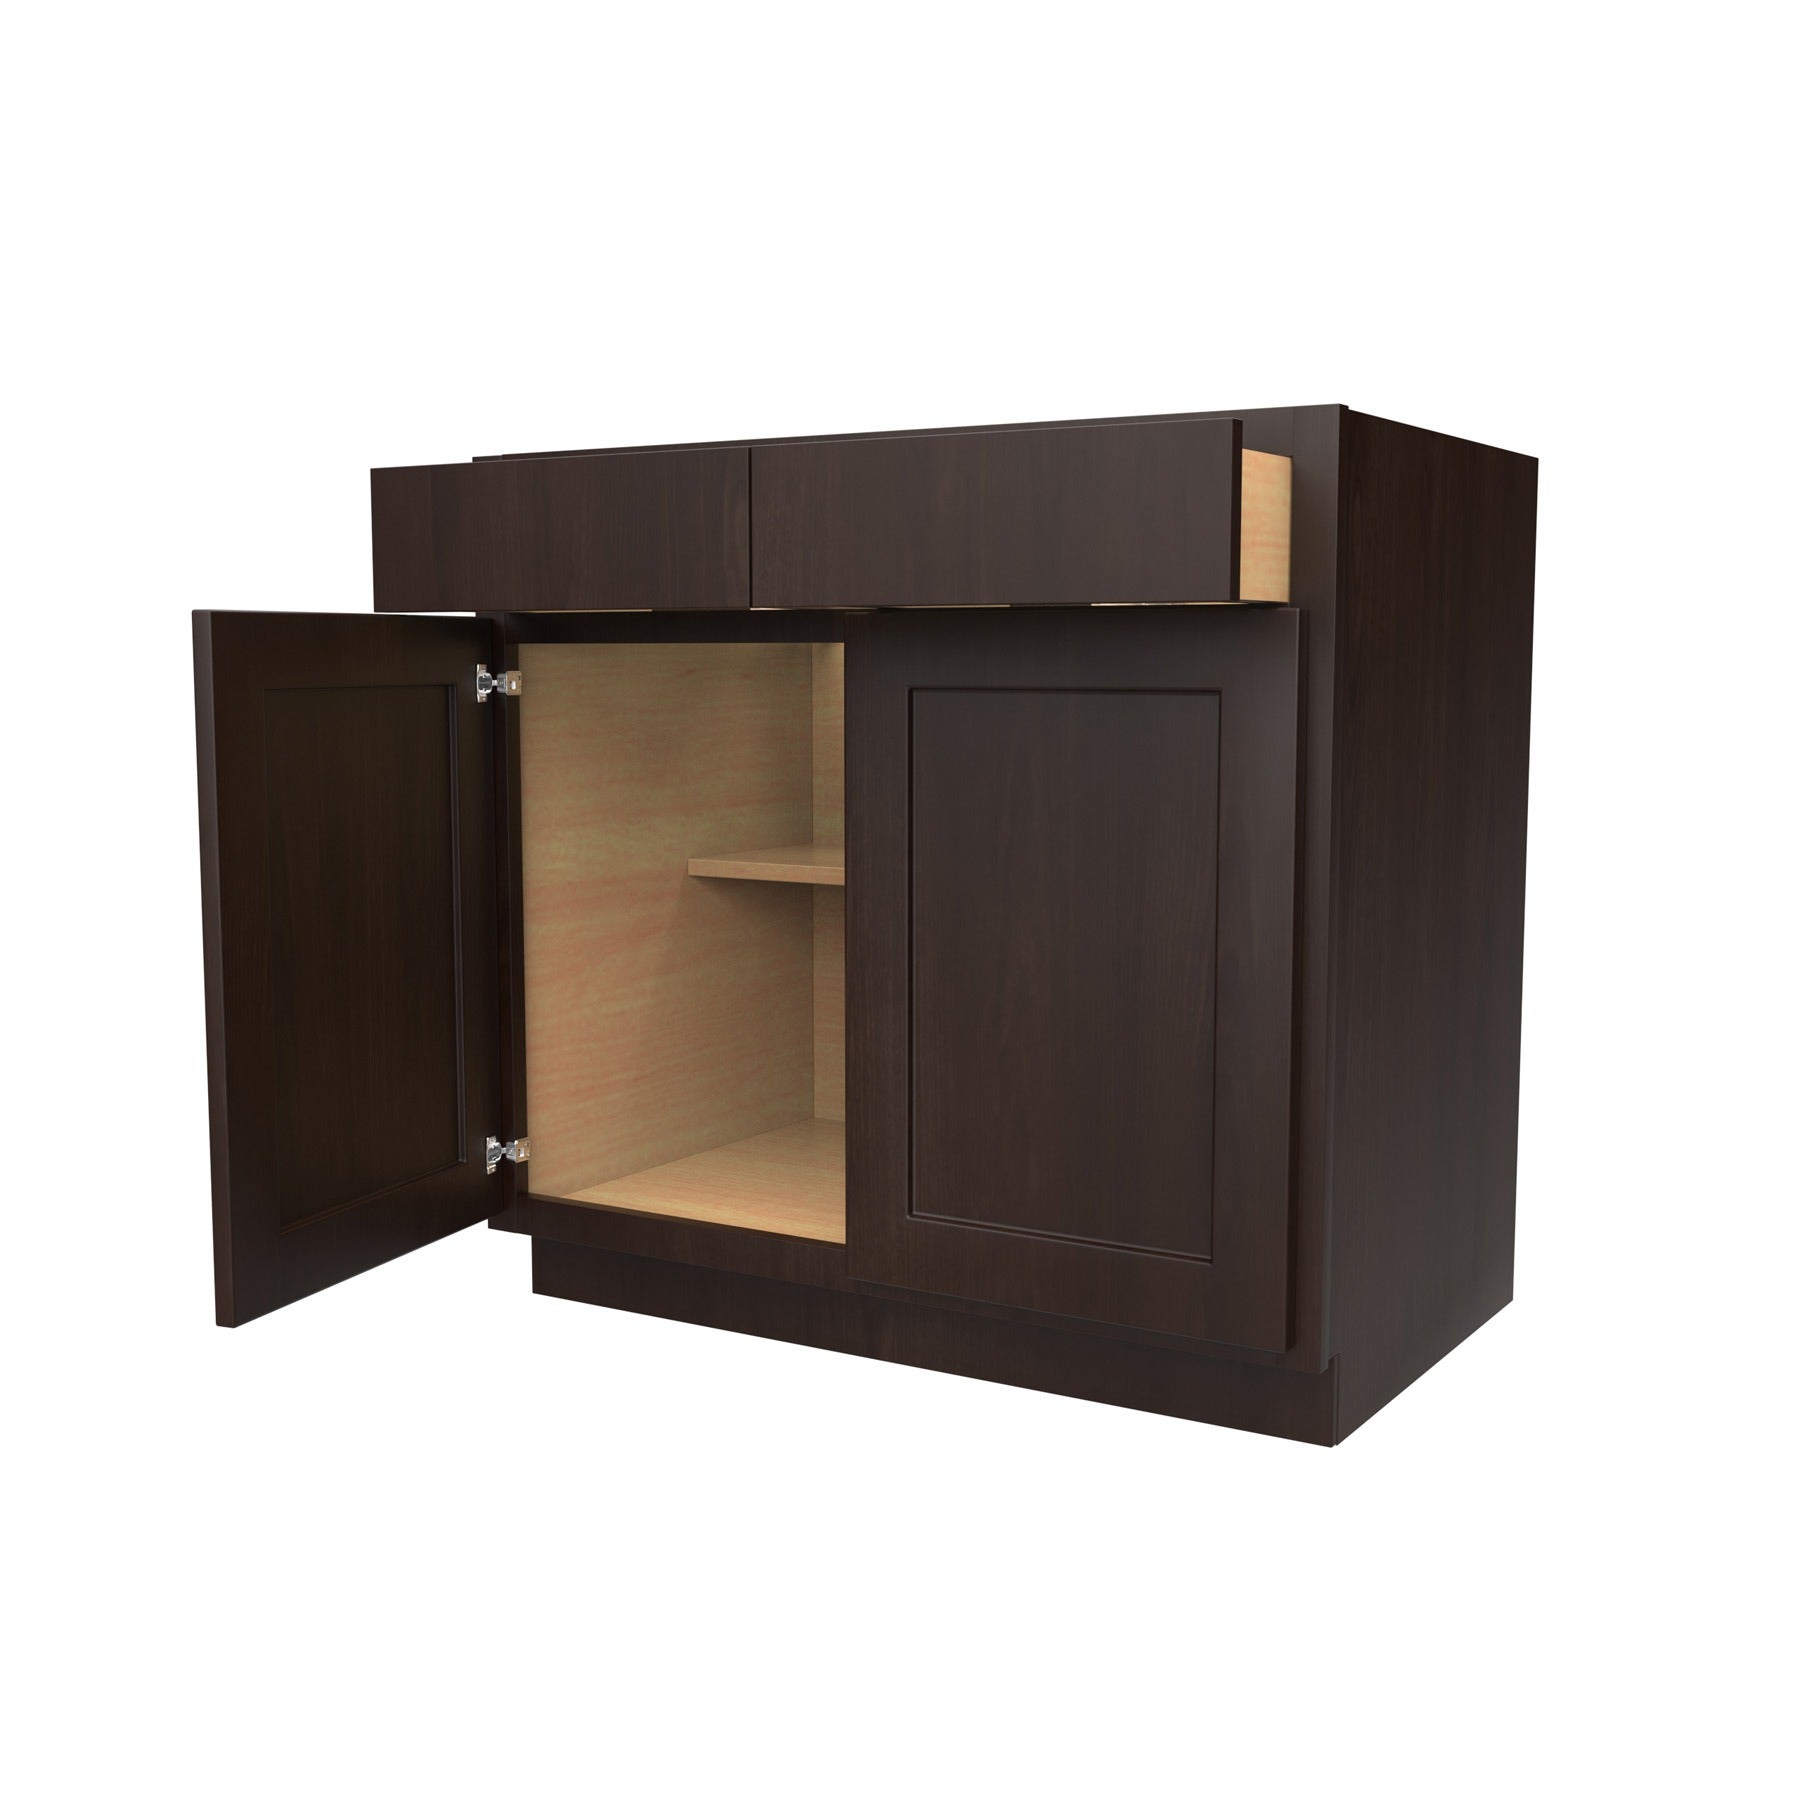 RTA Luxor Espresso - Double Door Base Cabinet | 36"W x 34.5"H x 24"D